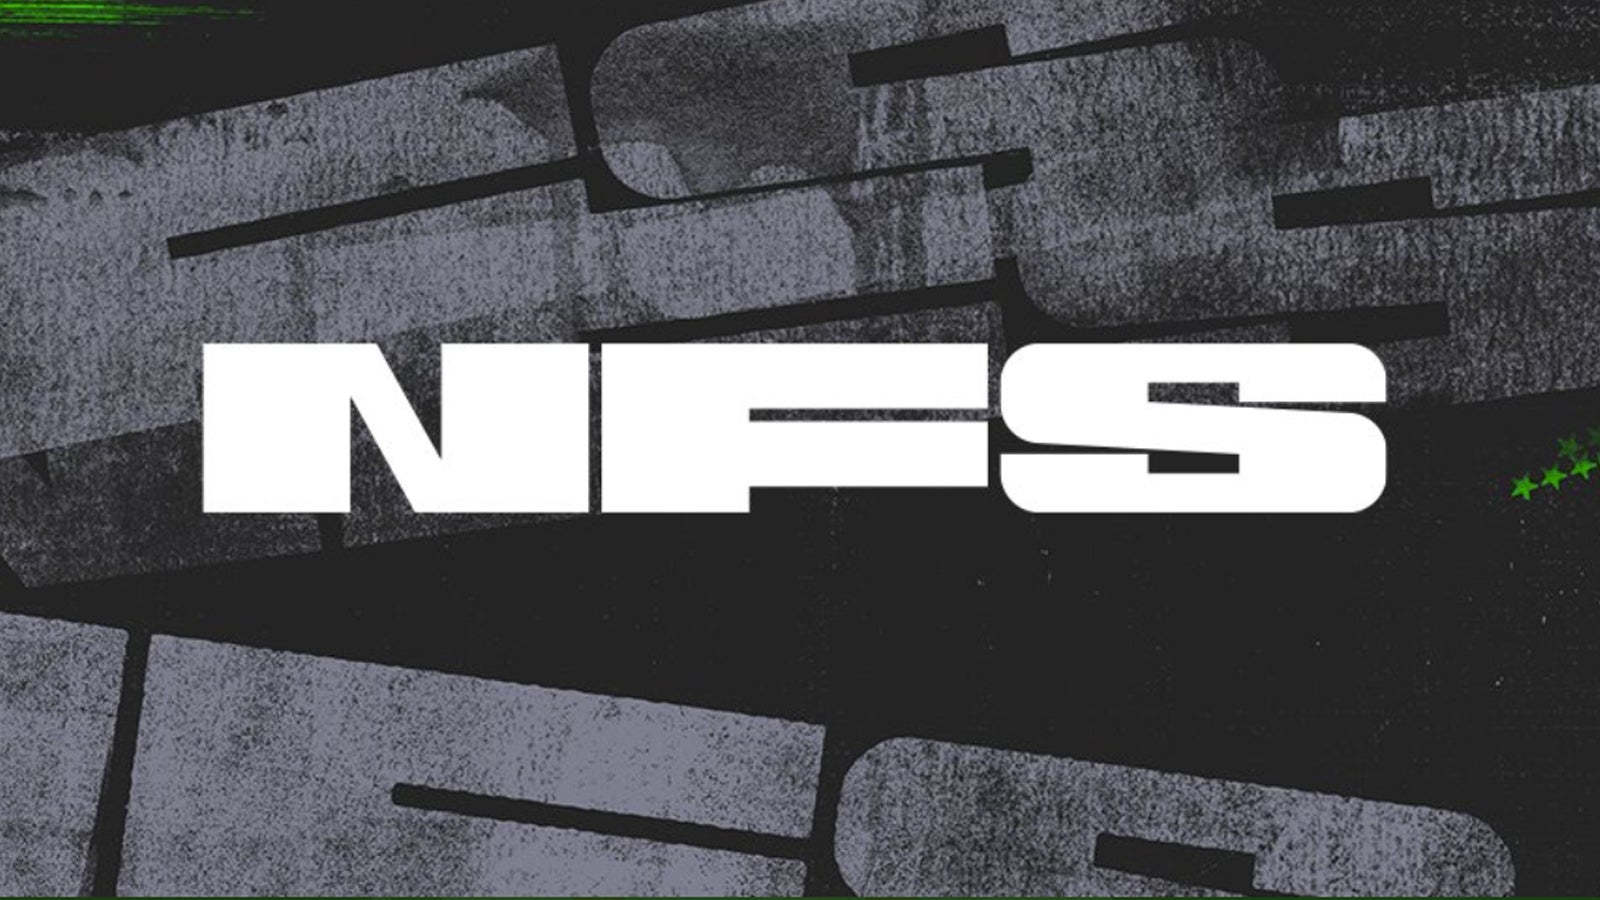 Nfs logo concept Vectors & Illustrations for Free Download | Freepik